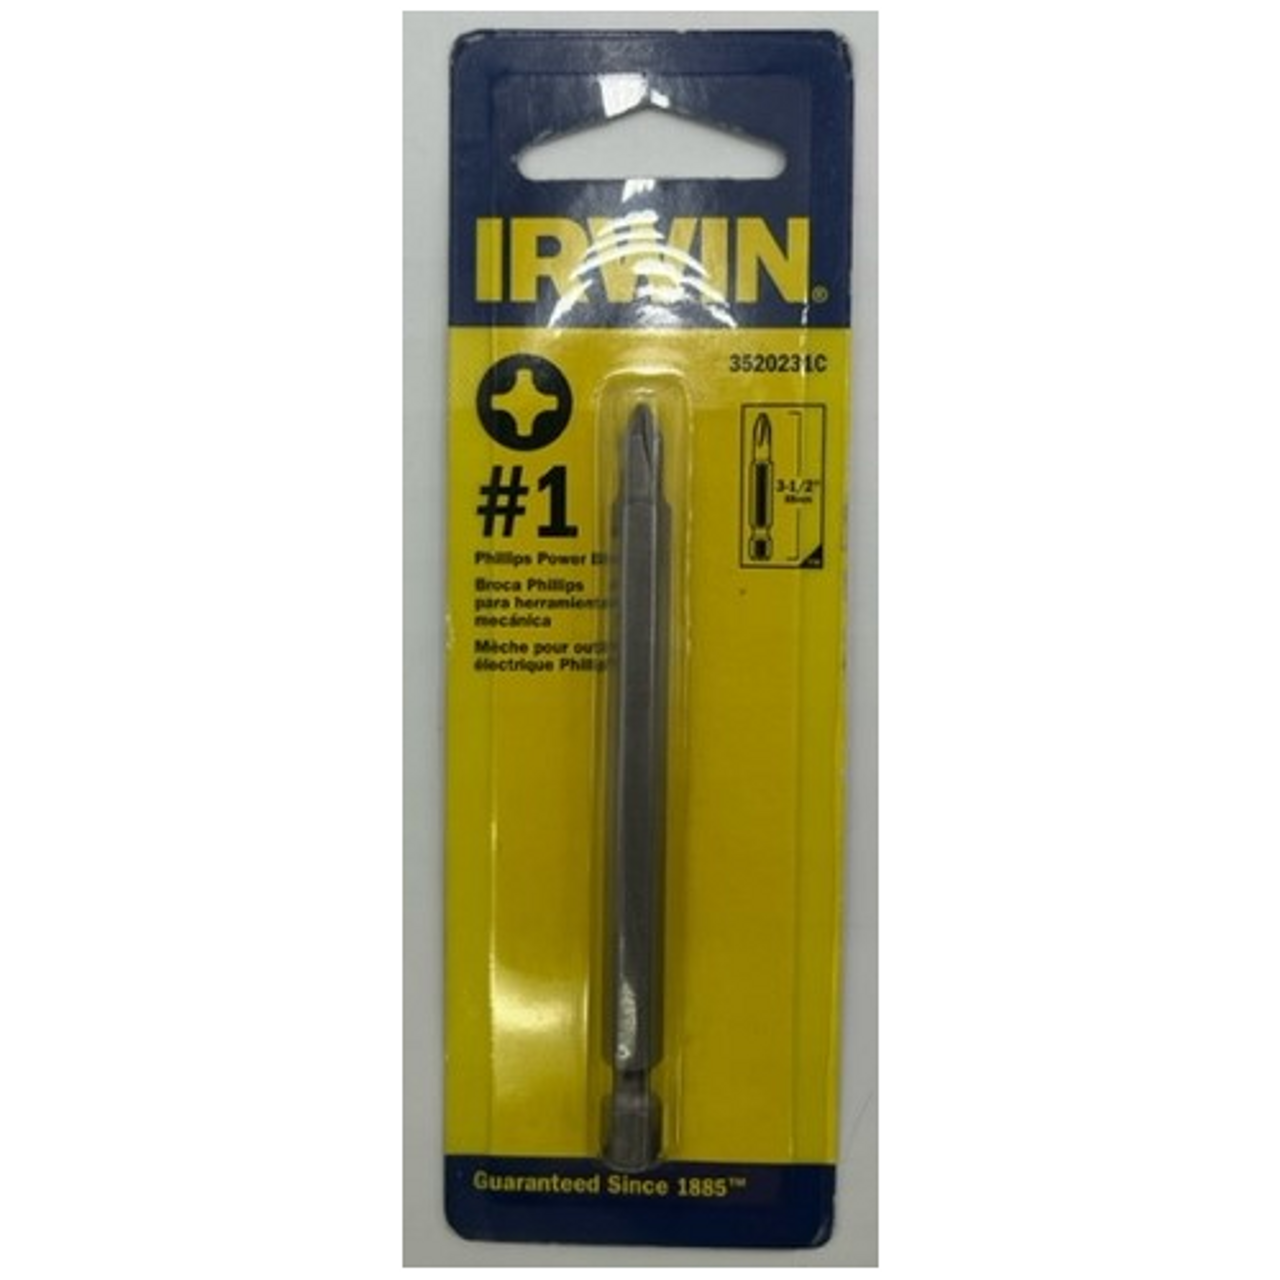 Irwin 3520231C Power Insert Bit #1 Phillips 3-1/2 inch length - 1 pack